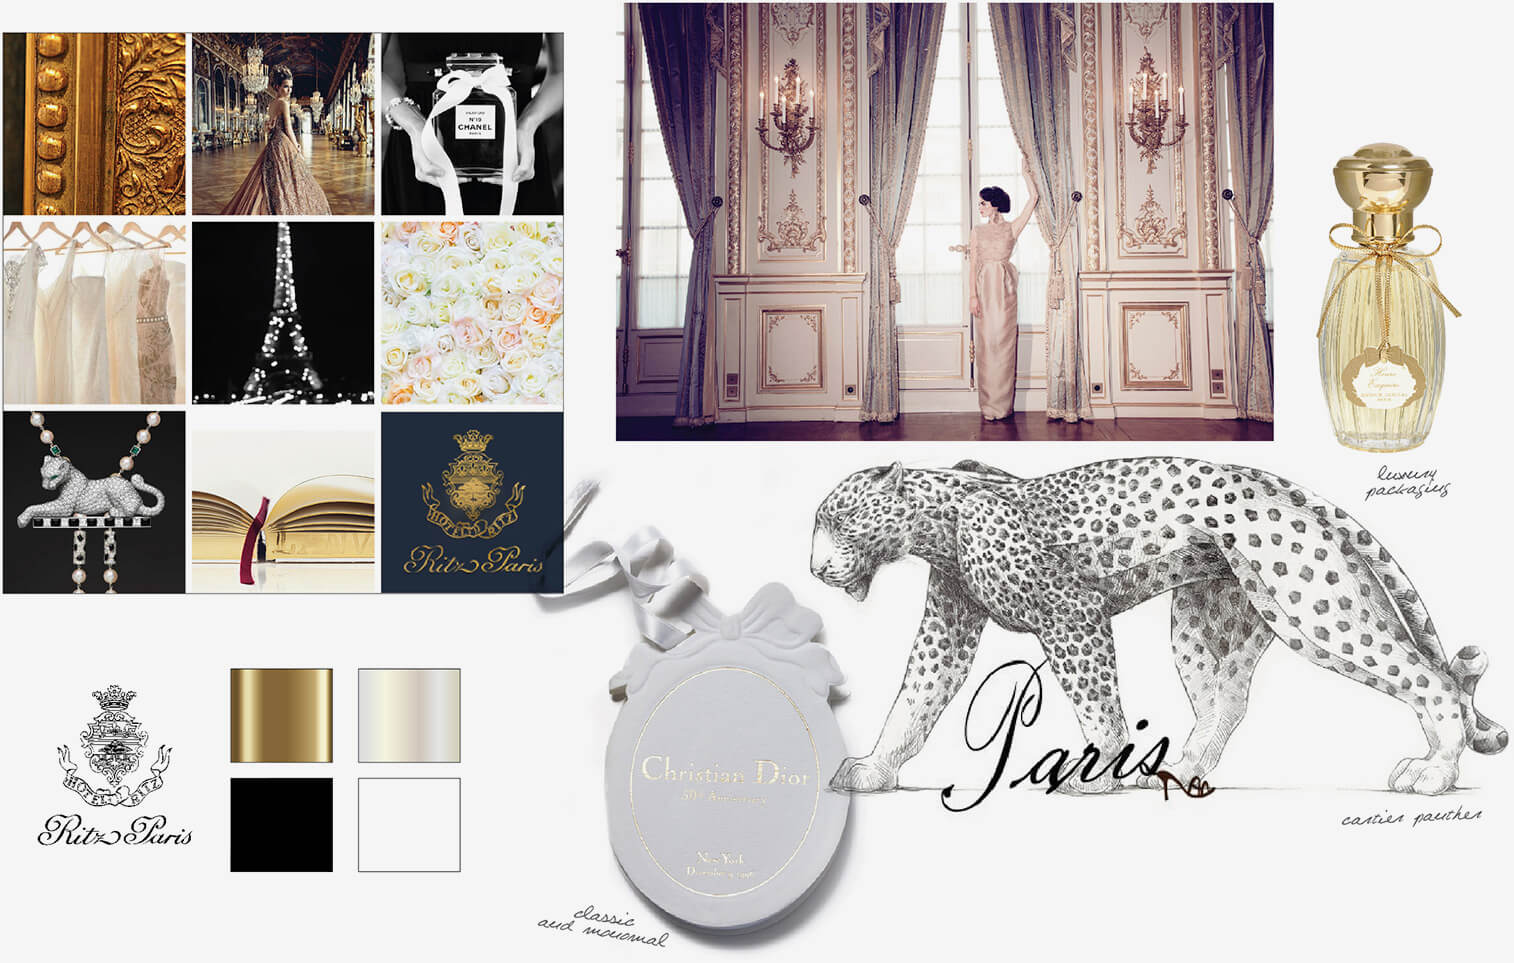 Cartier and Christian Dior image inspiration